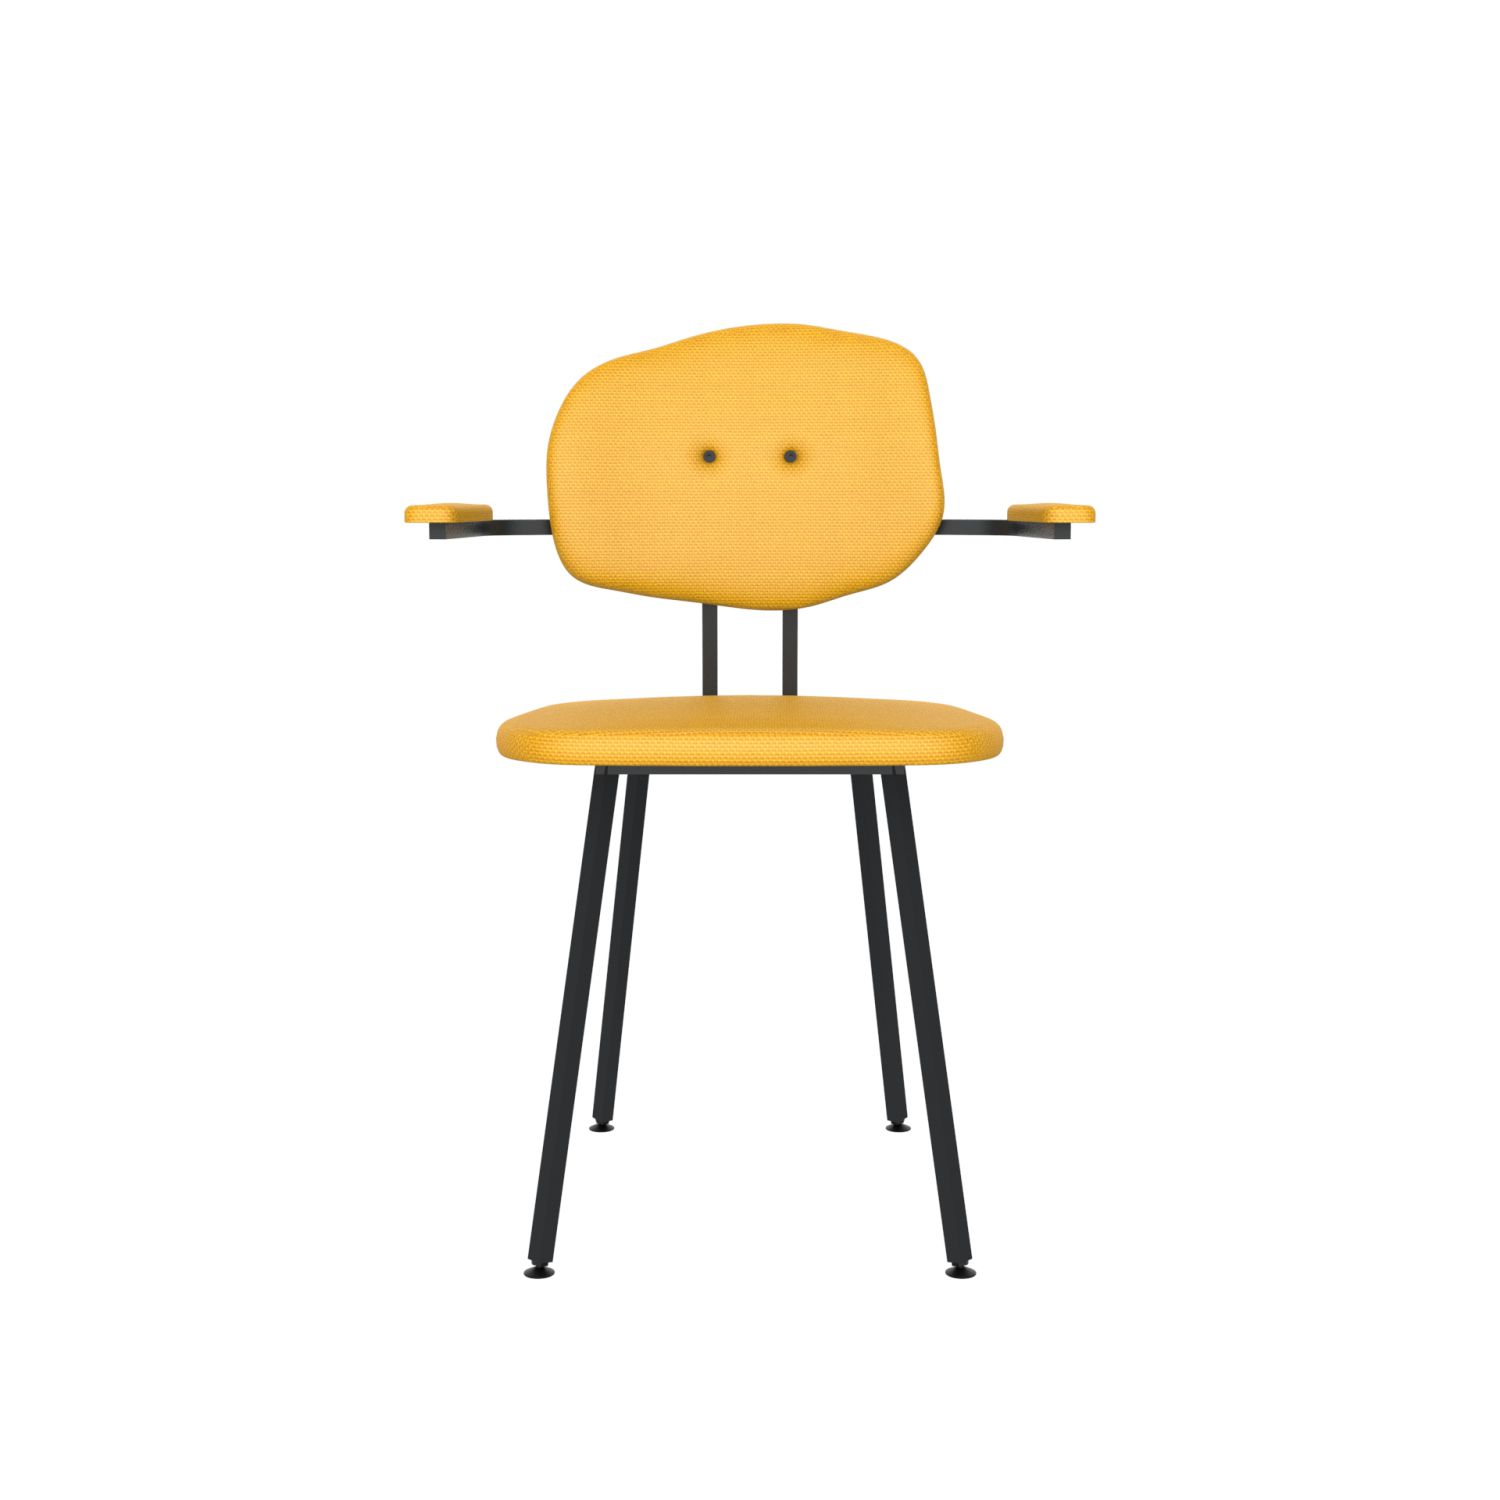 lensvelt maarten baas chair 102 not stackable with armrests backrest e lemon yellow 051 black ral9005 hard leg ends